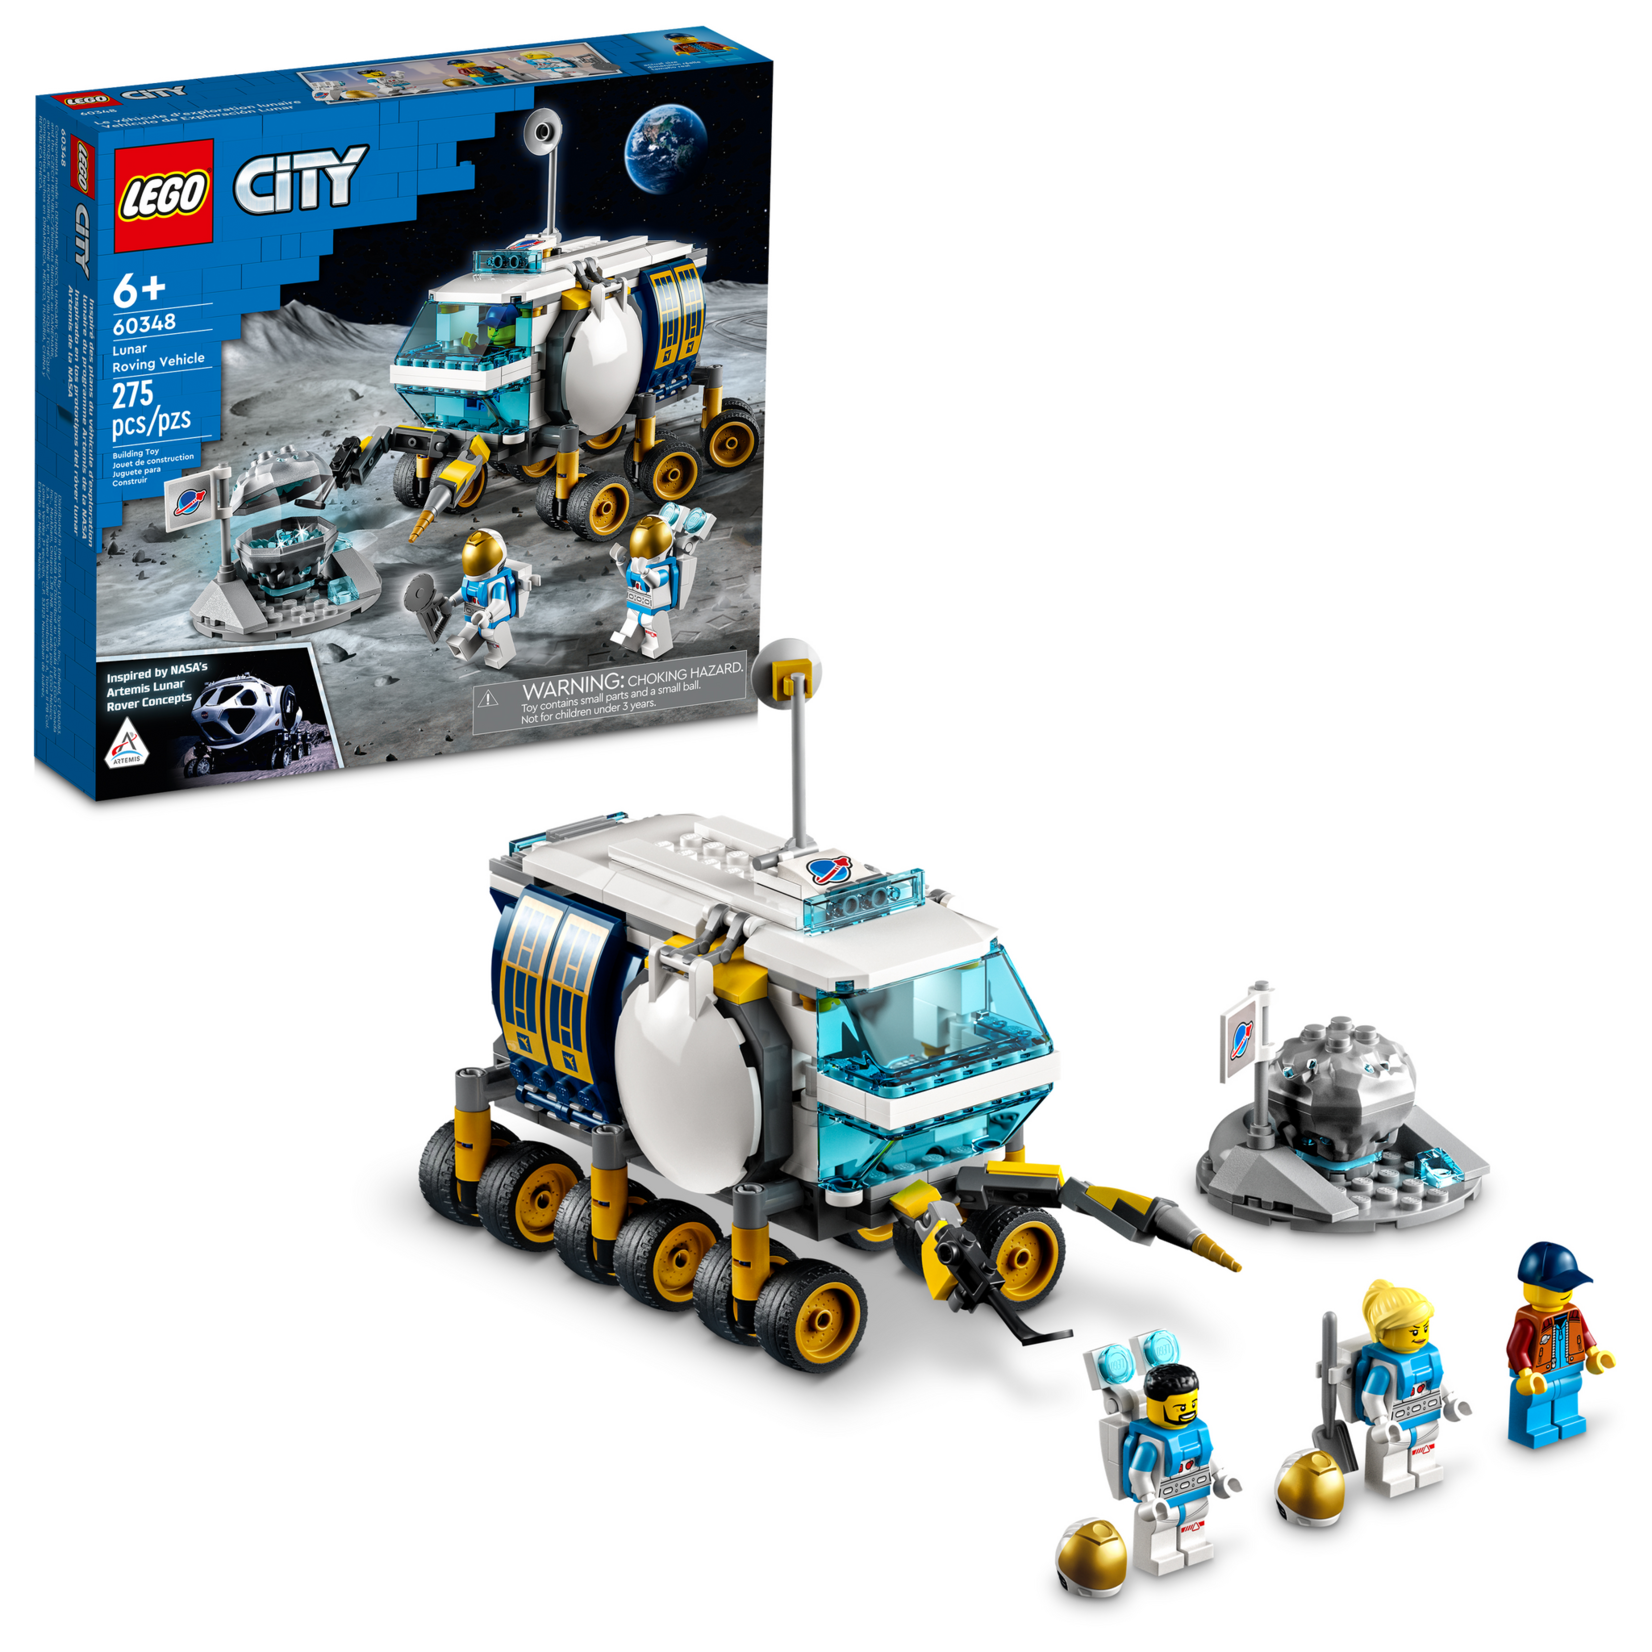 LEGO 60348 LEGO® City Lunar Roving Vehicle